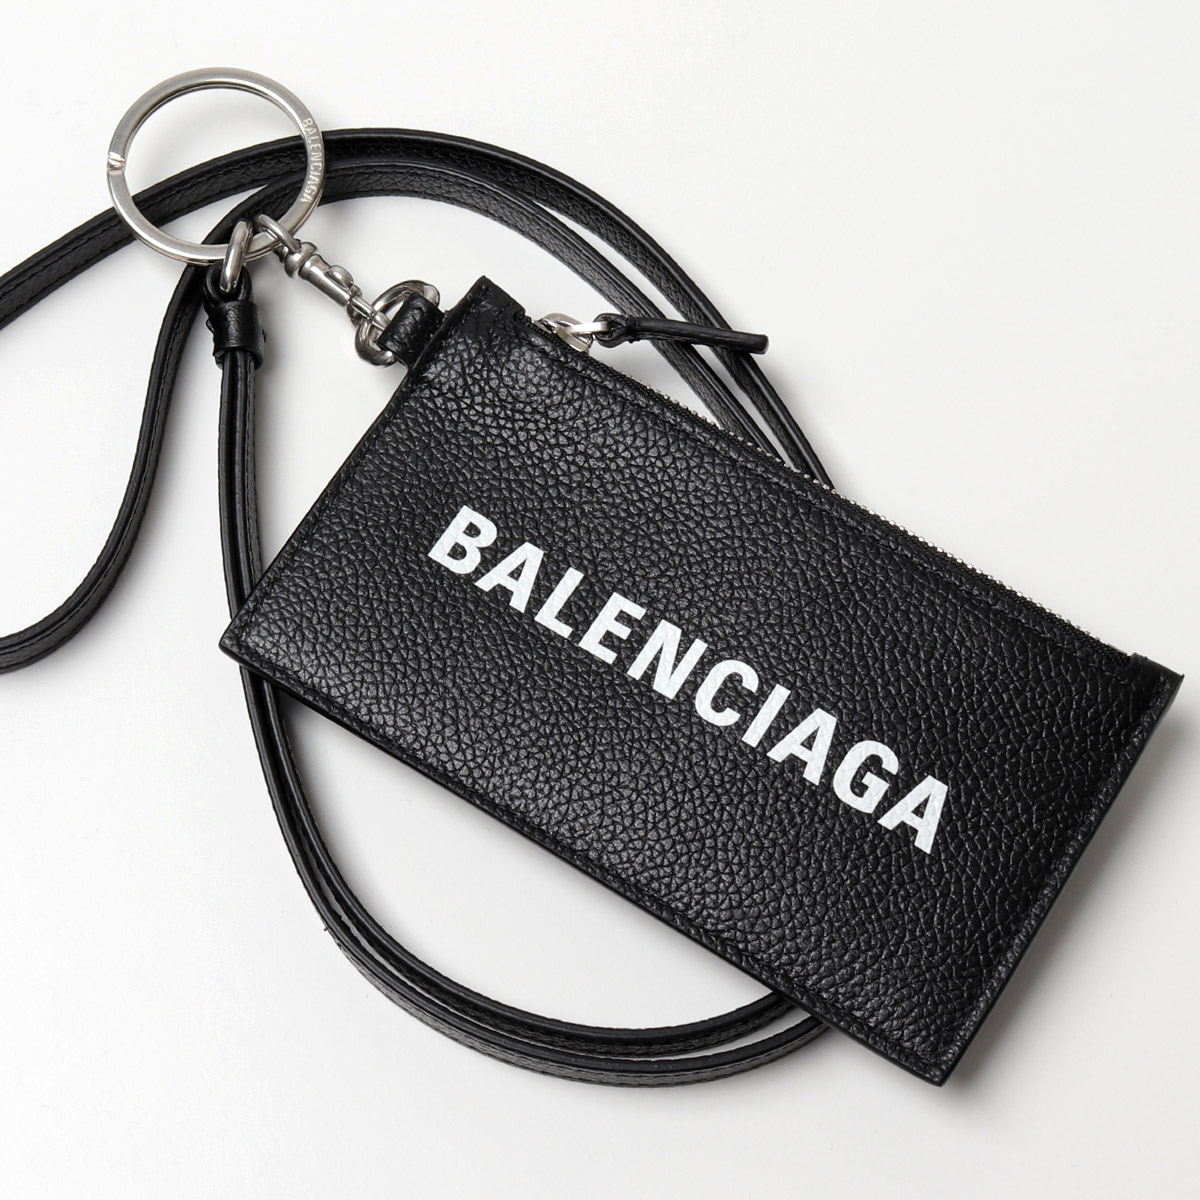 BALENCIAGA バレンシアガ 594548 1IZI3 1IZ43 レザー コイン&カードケース ネックポーチ フラグメントケース 1090/BLACK/L-WHITE レディース